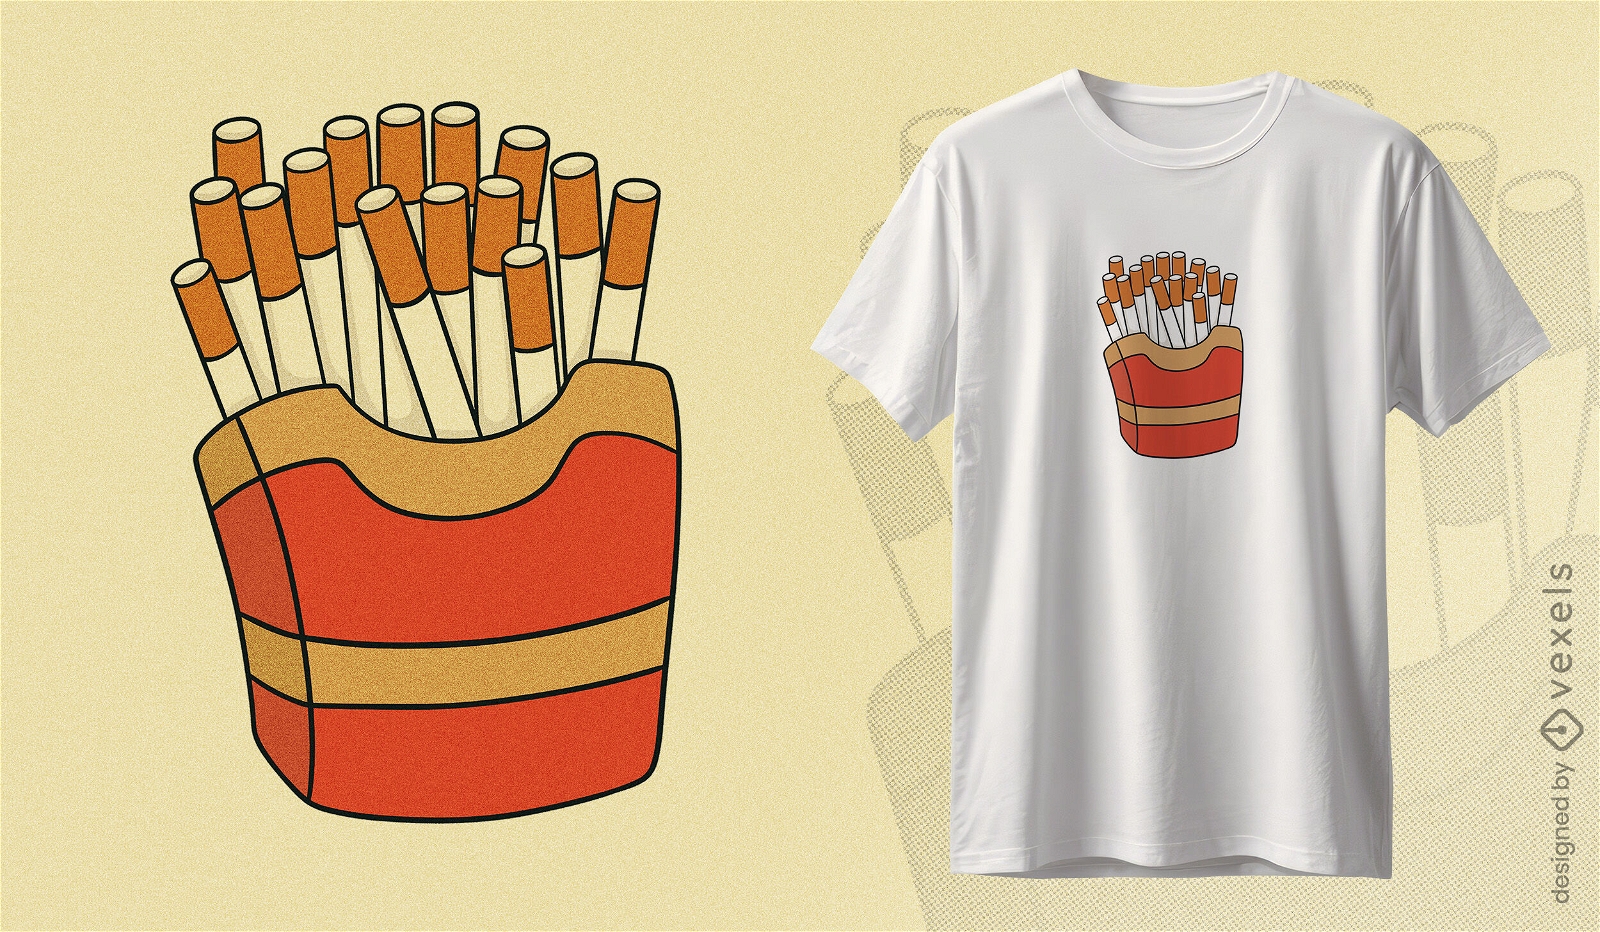 Satire fries t-shirt design